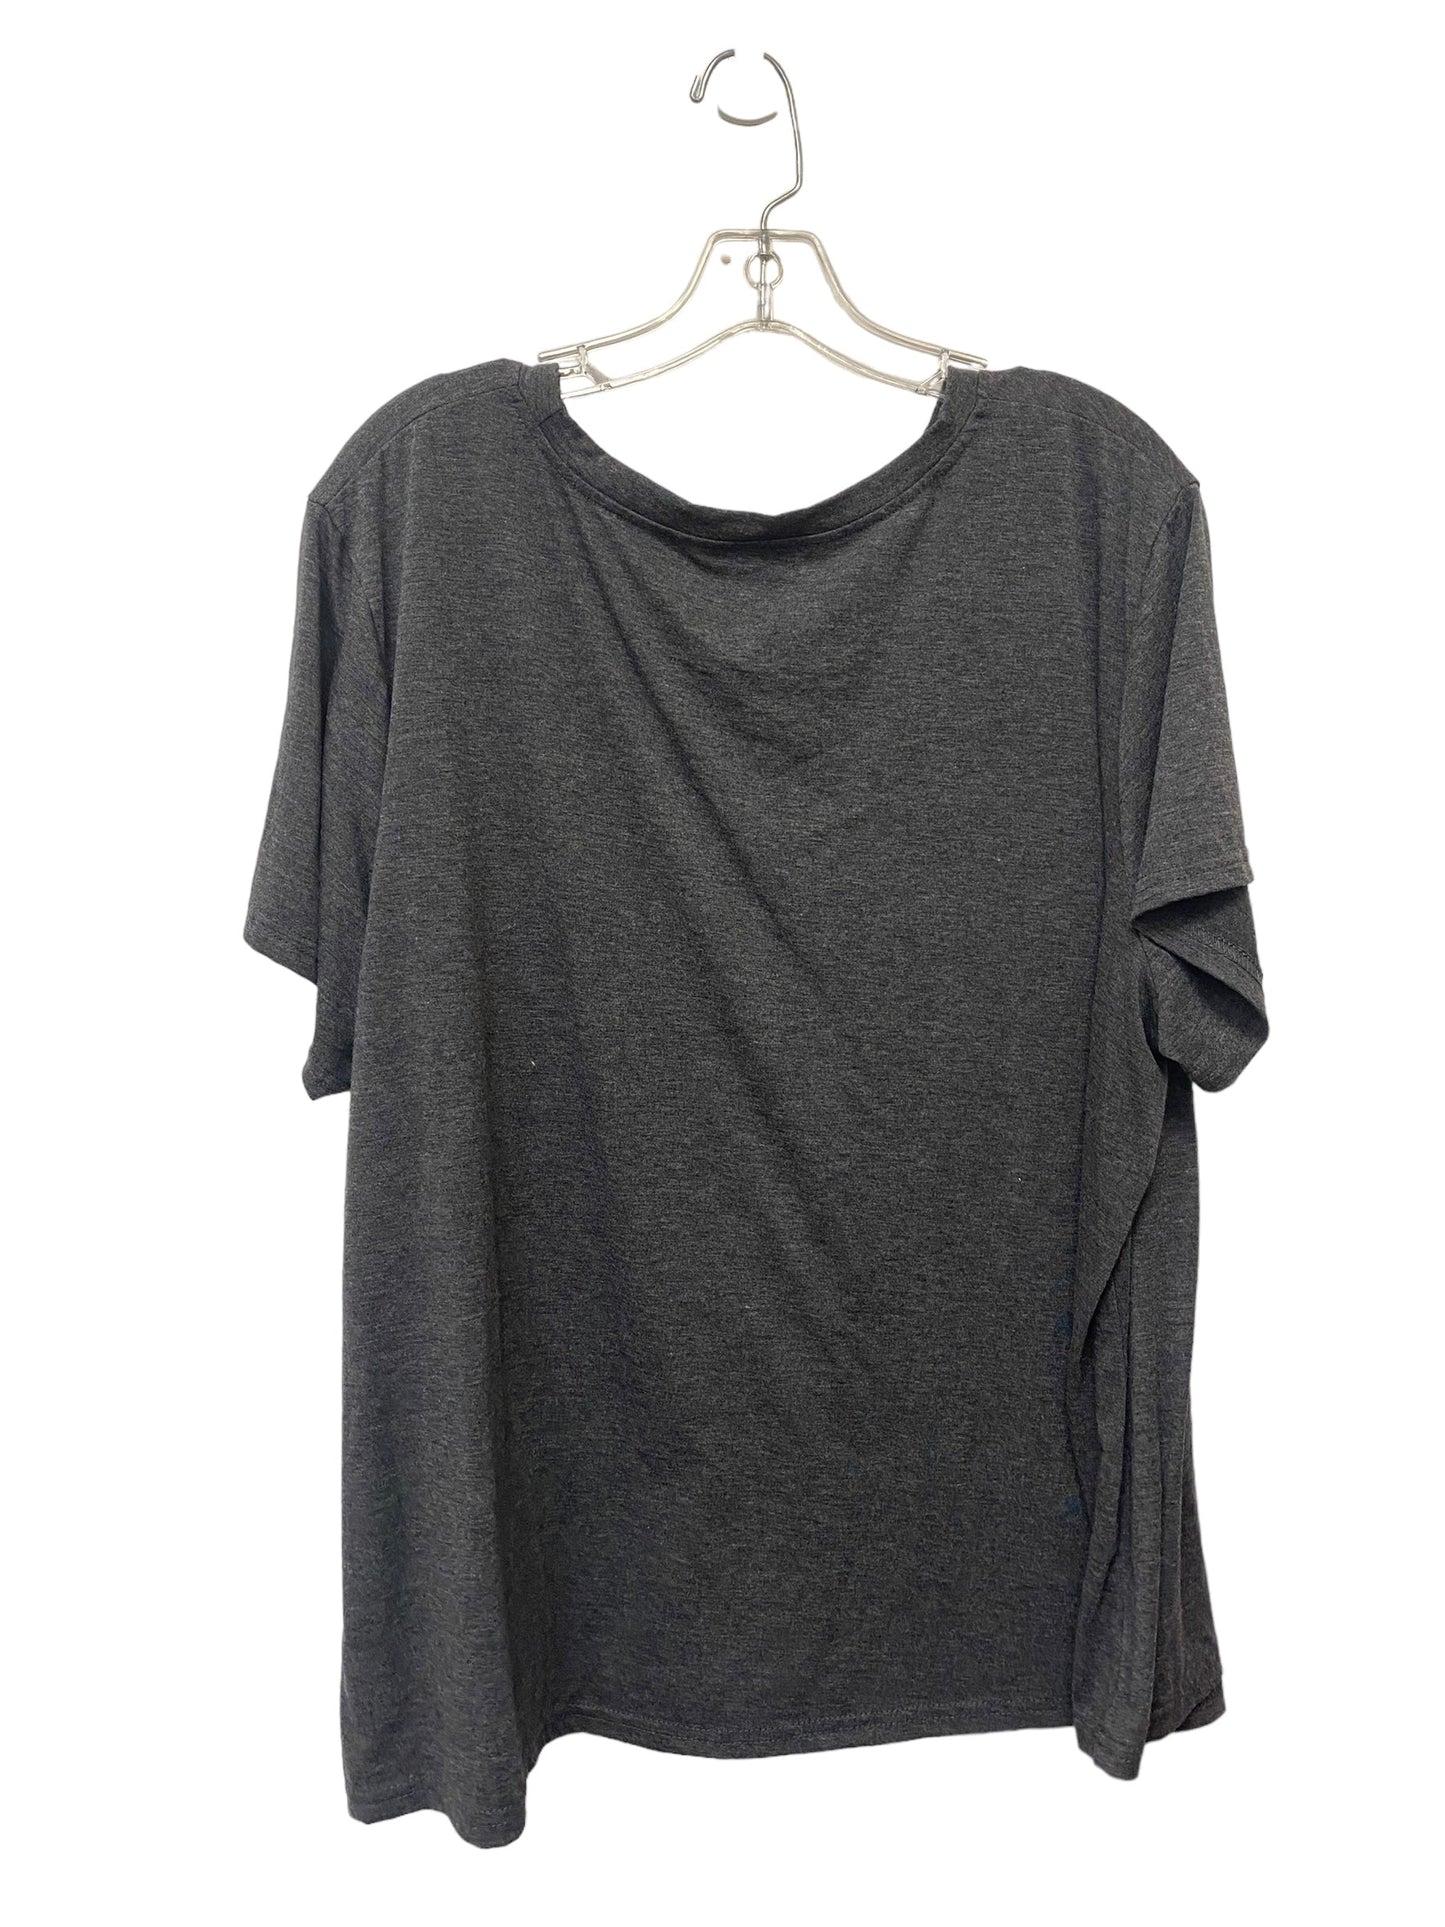 Grey Top Short Sleeve Shein, Size 4x